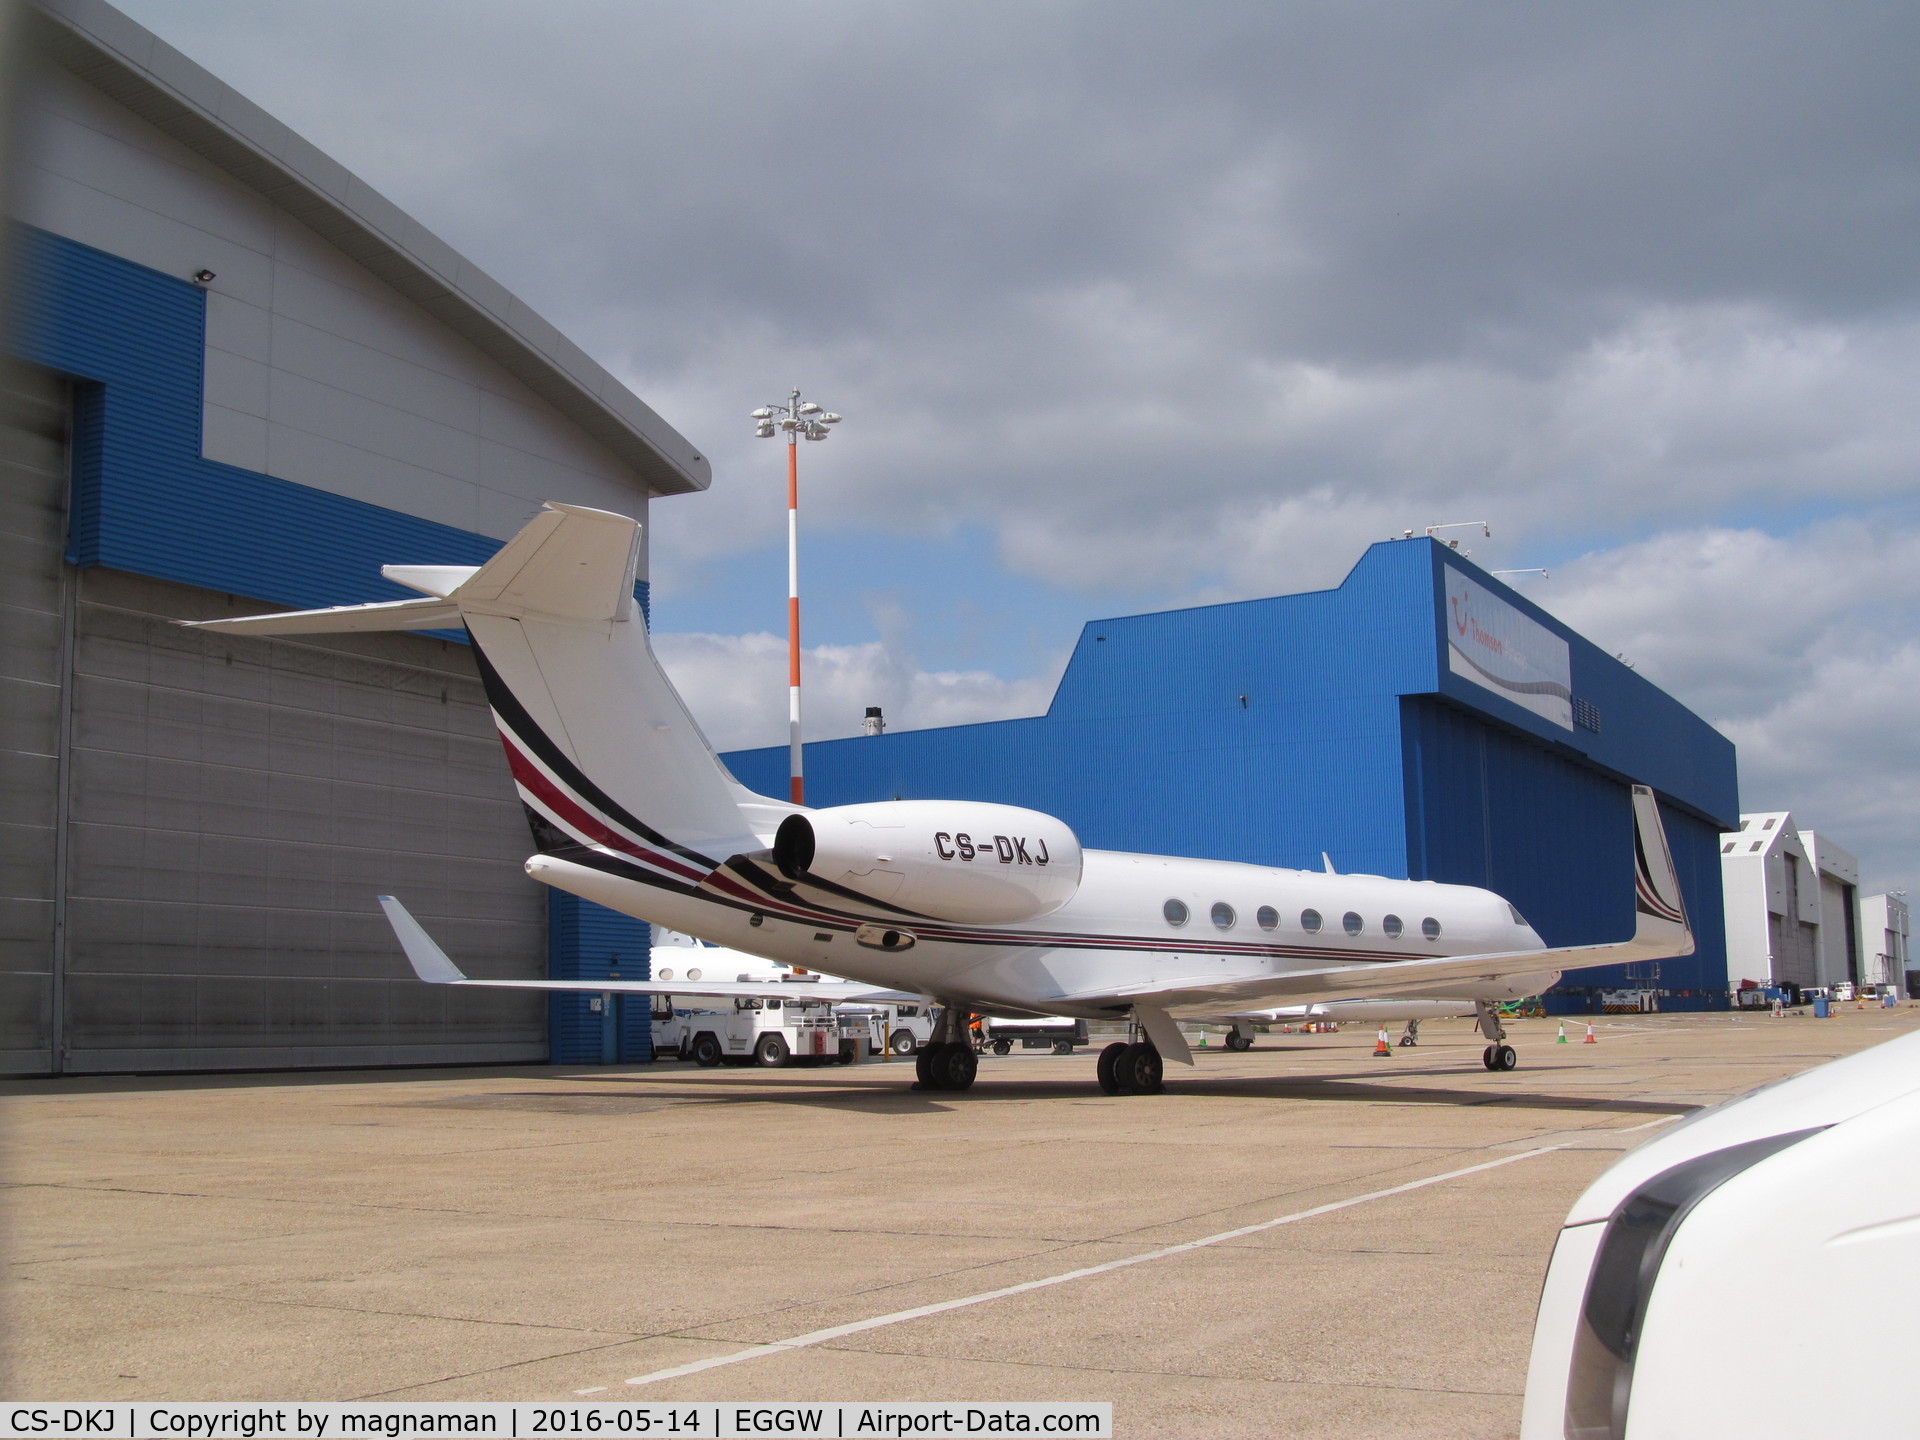 CS-DKJ, 2008 Gulfstream Aerospace V-SP G550 C/N 5174, on apron at luton